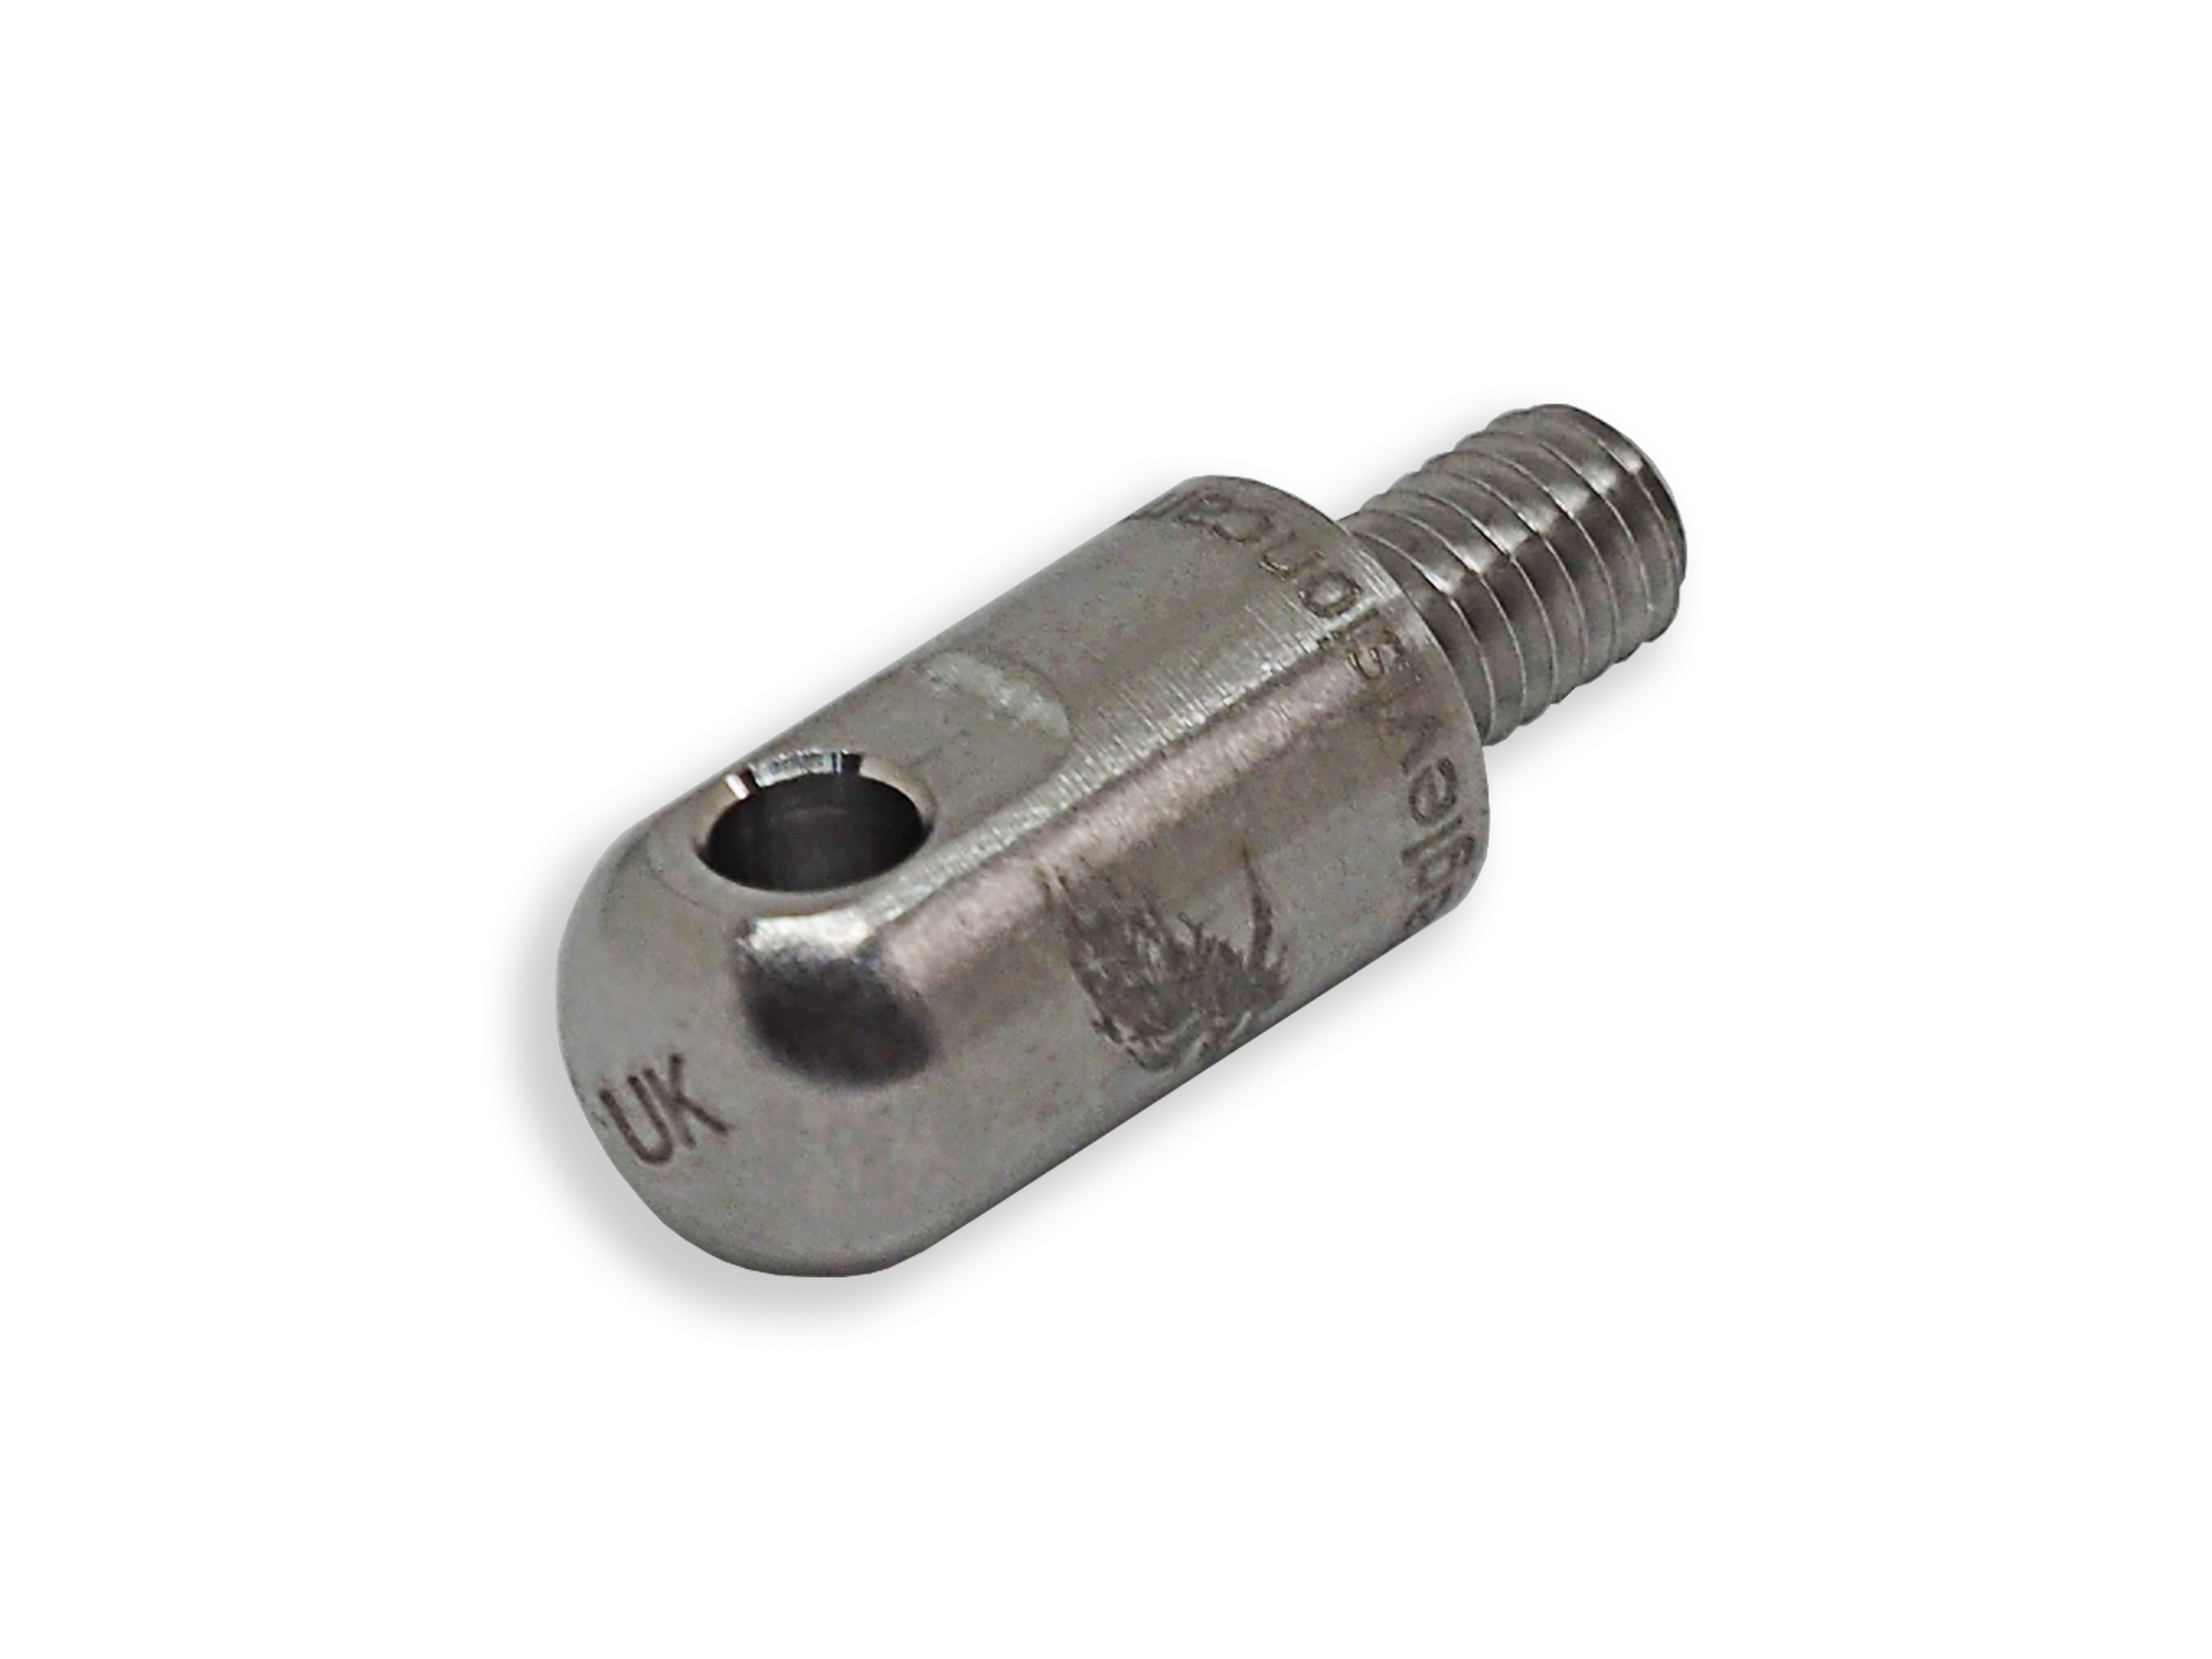 Stainless steel CNC bipod sling stud screw FX BOBCAT M8 x 18.6mm 